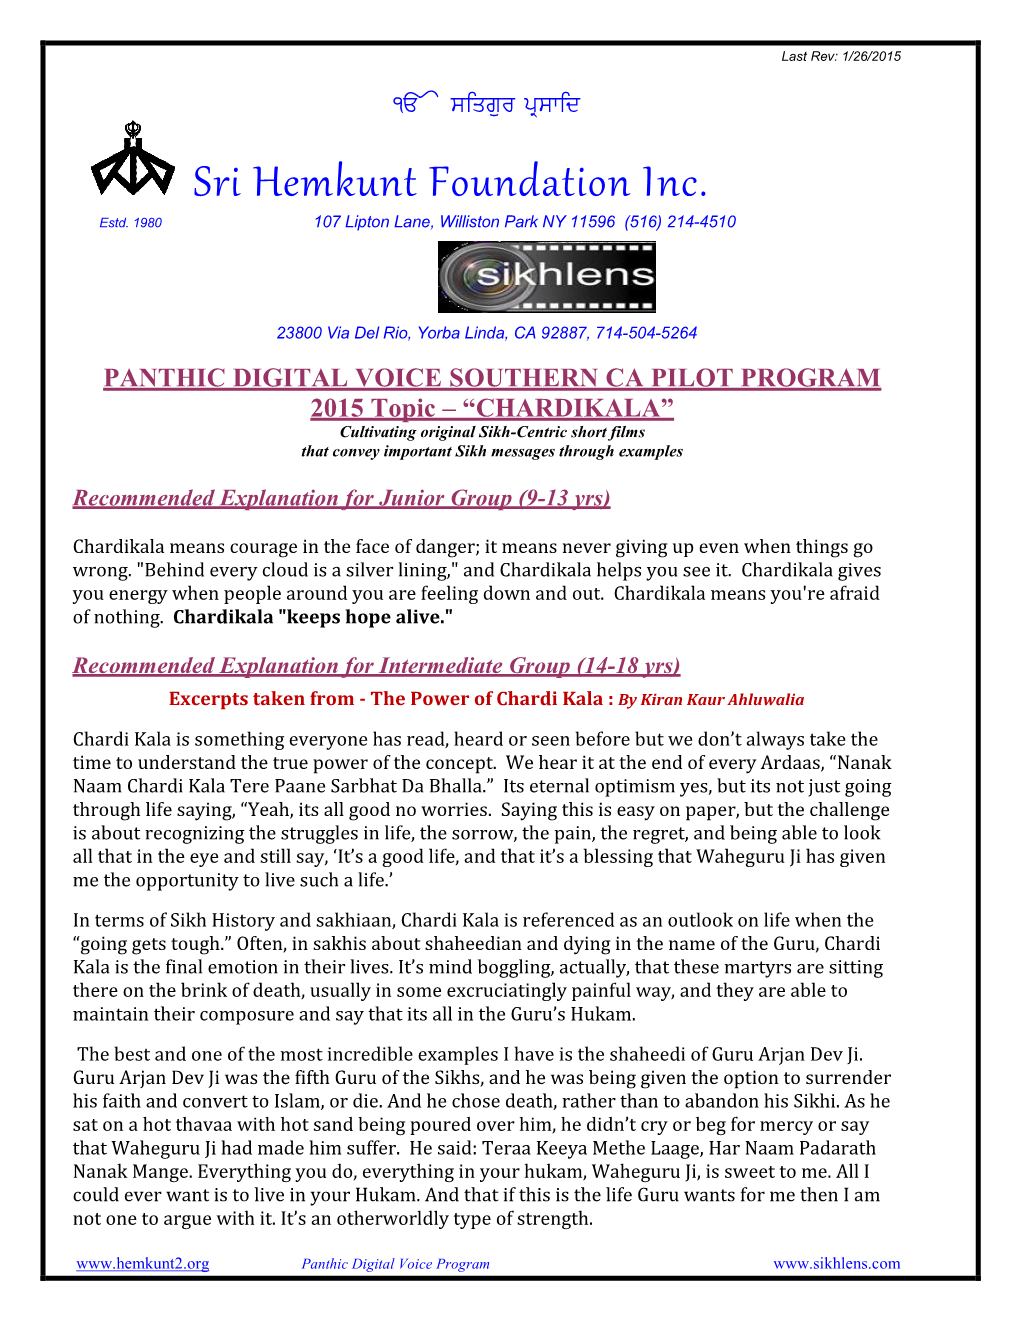 Sri Hemkunt Foundation Inc. Estd